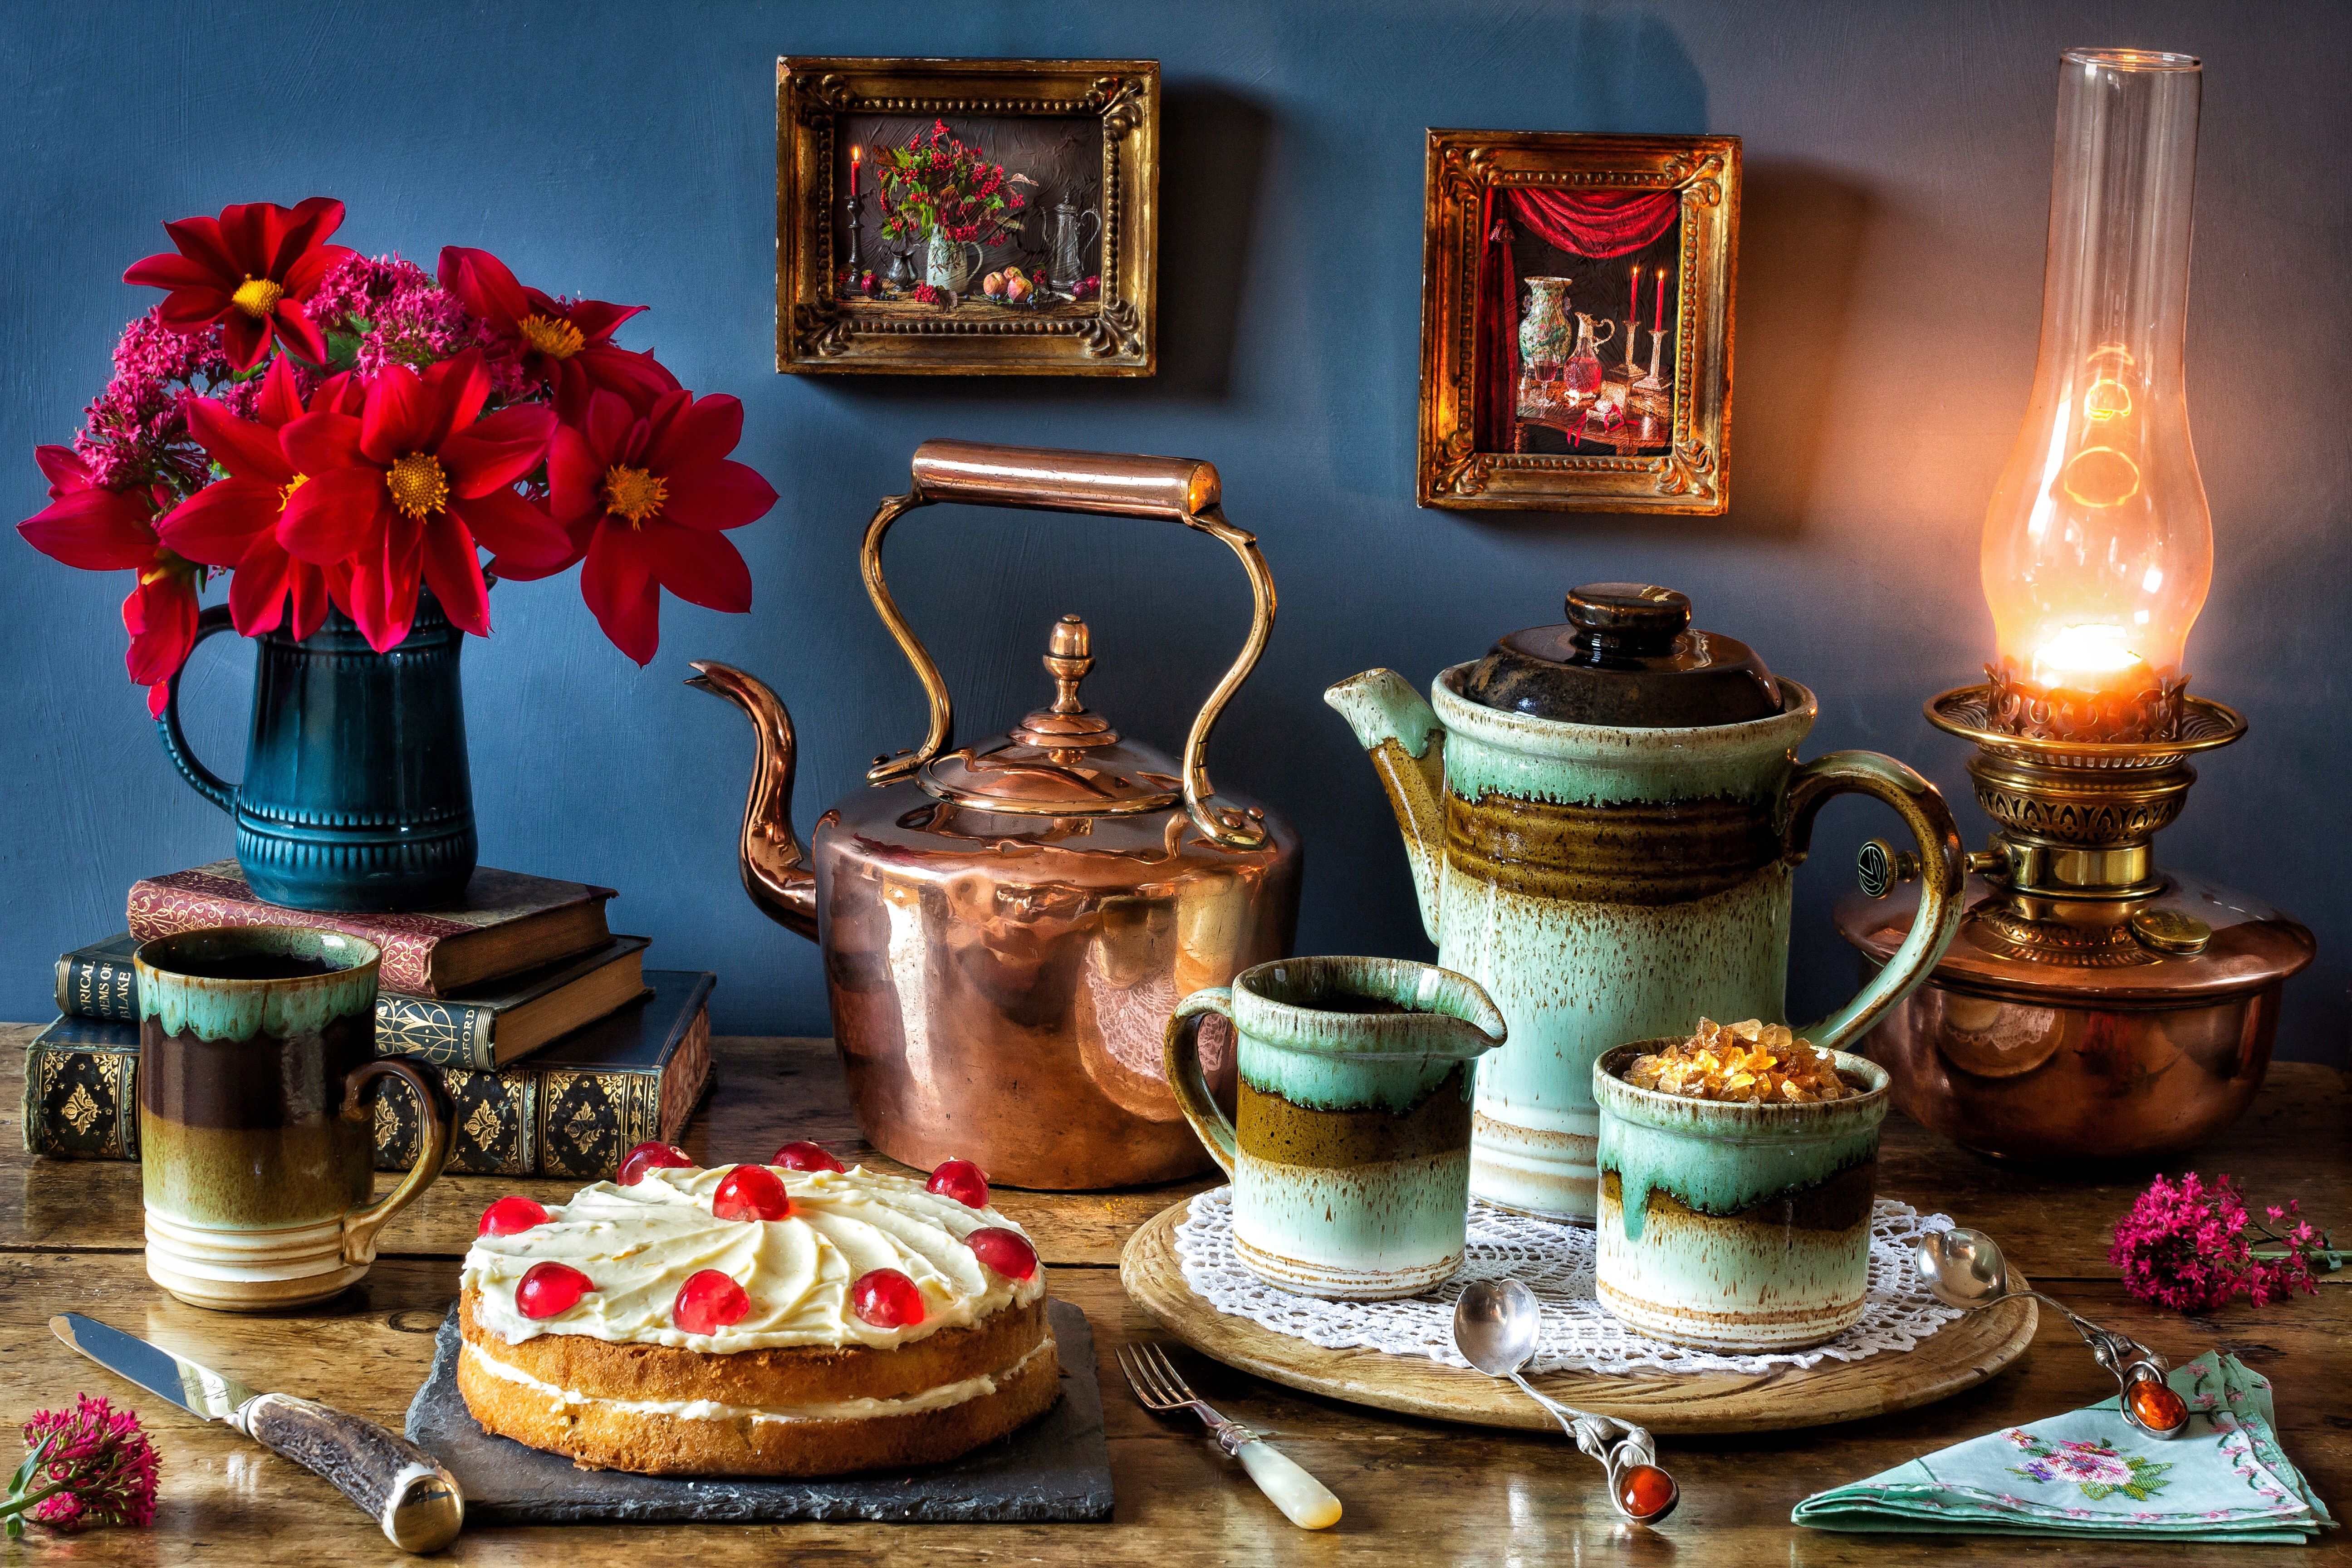 teapot, spoon, photography, still life, book, cake, flower, knife, lantern, painting